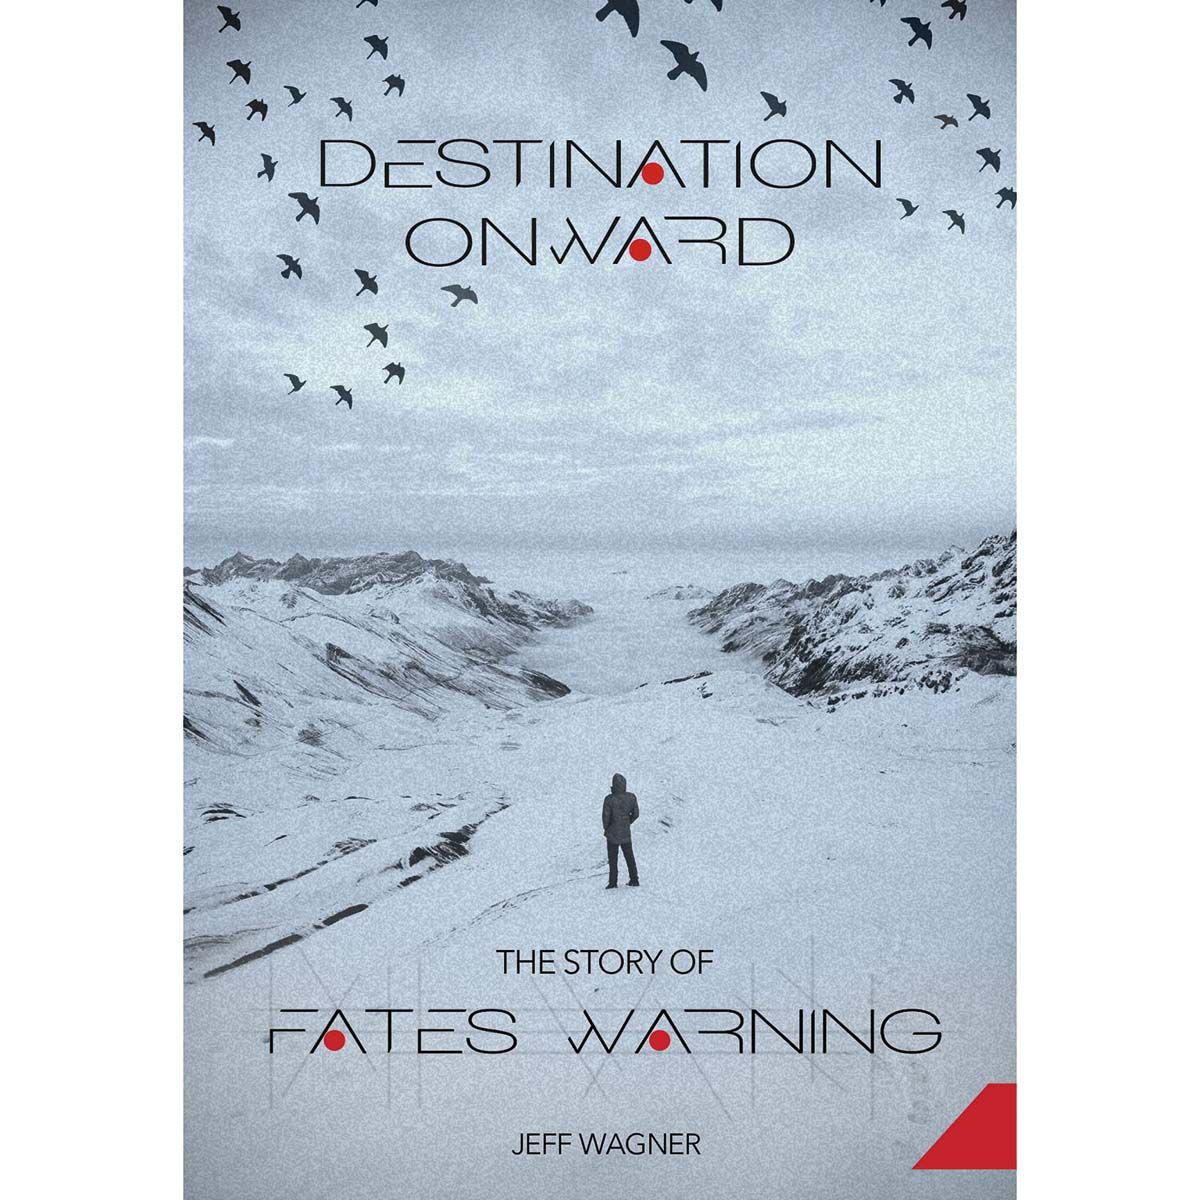 Fates Warning - Destination Onward - The Story Of Fates Warning